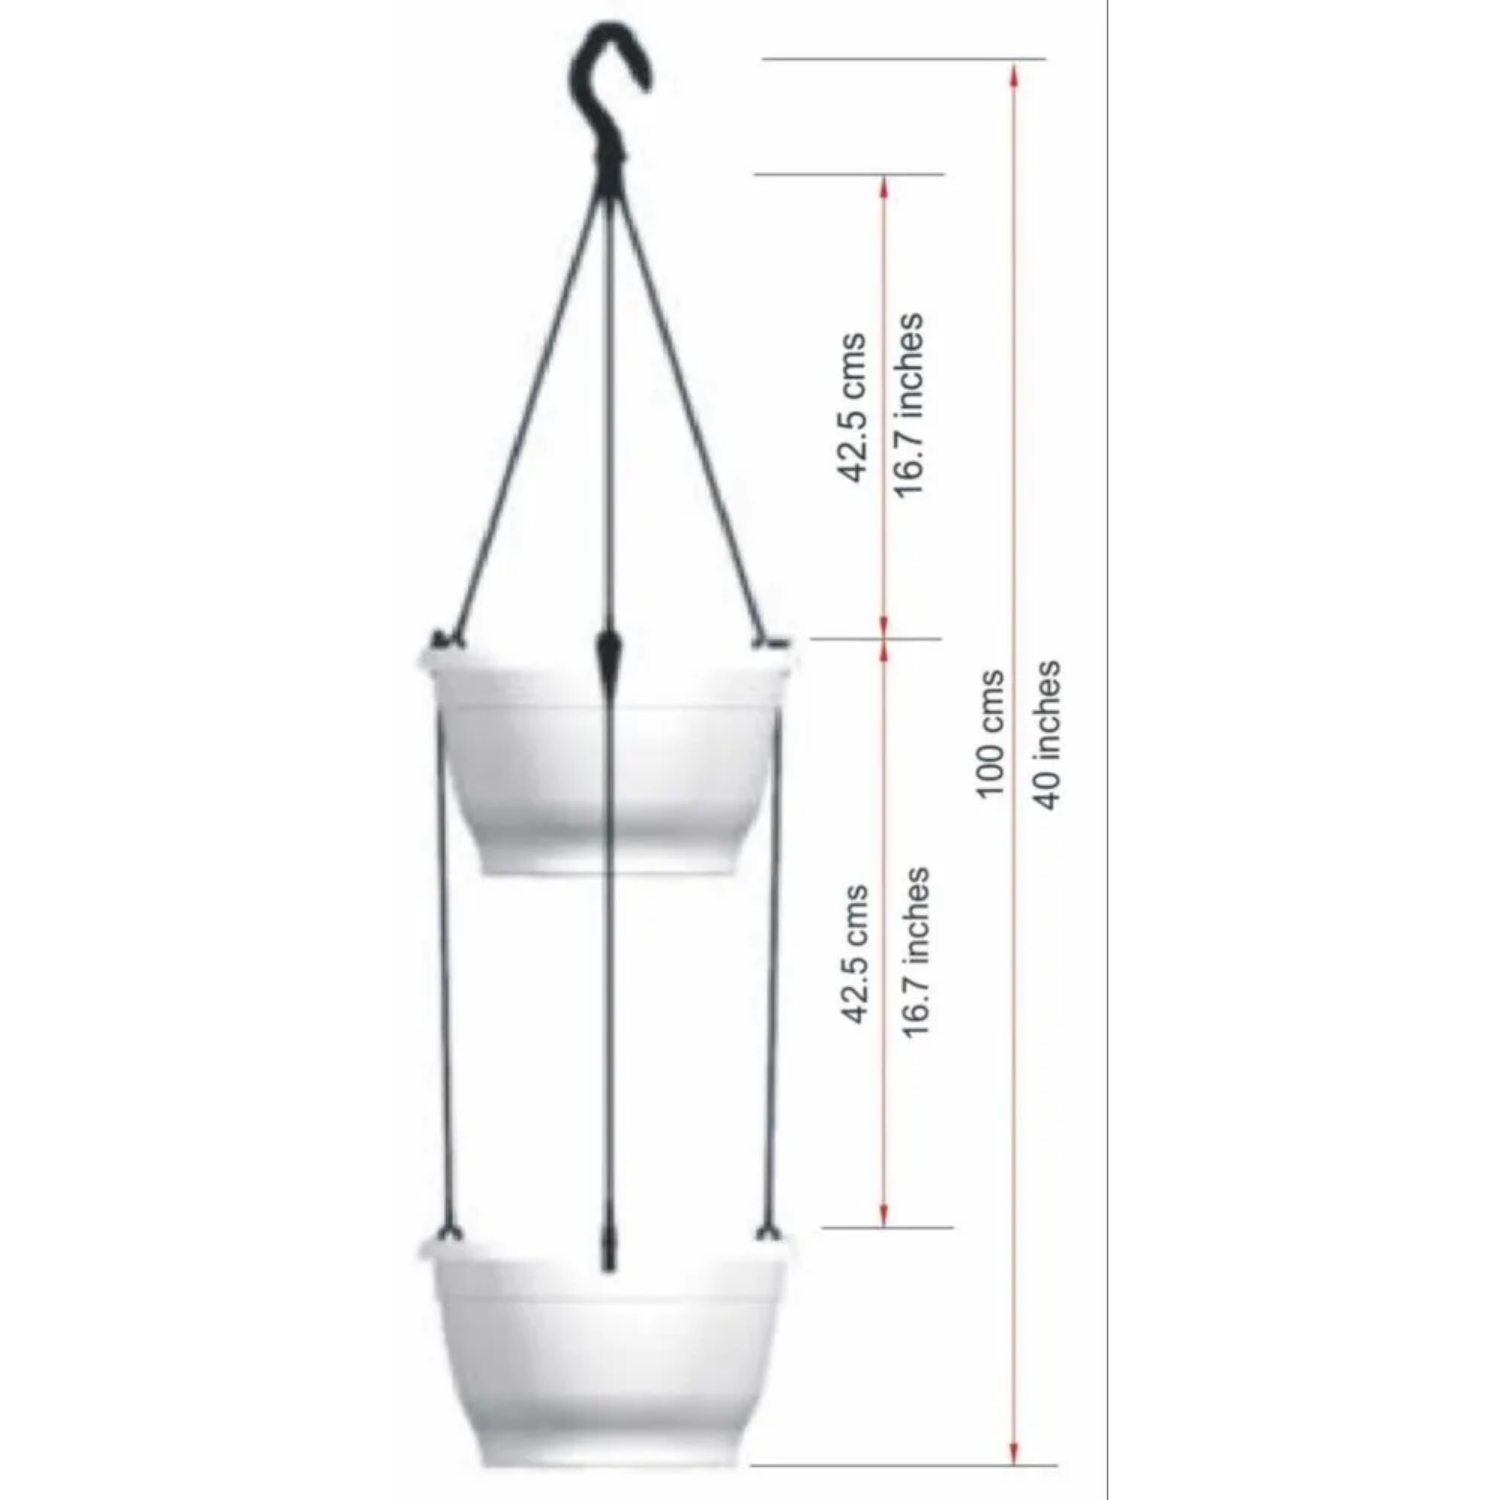 Tuka 25 Two Tier Hanging Plastic Pot (Withou Self-Watering Kit)